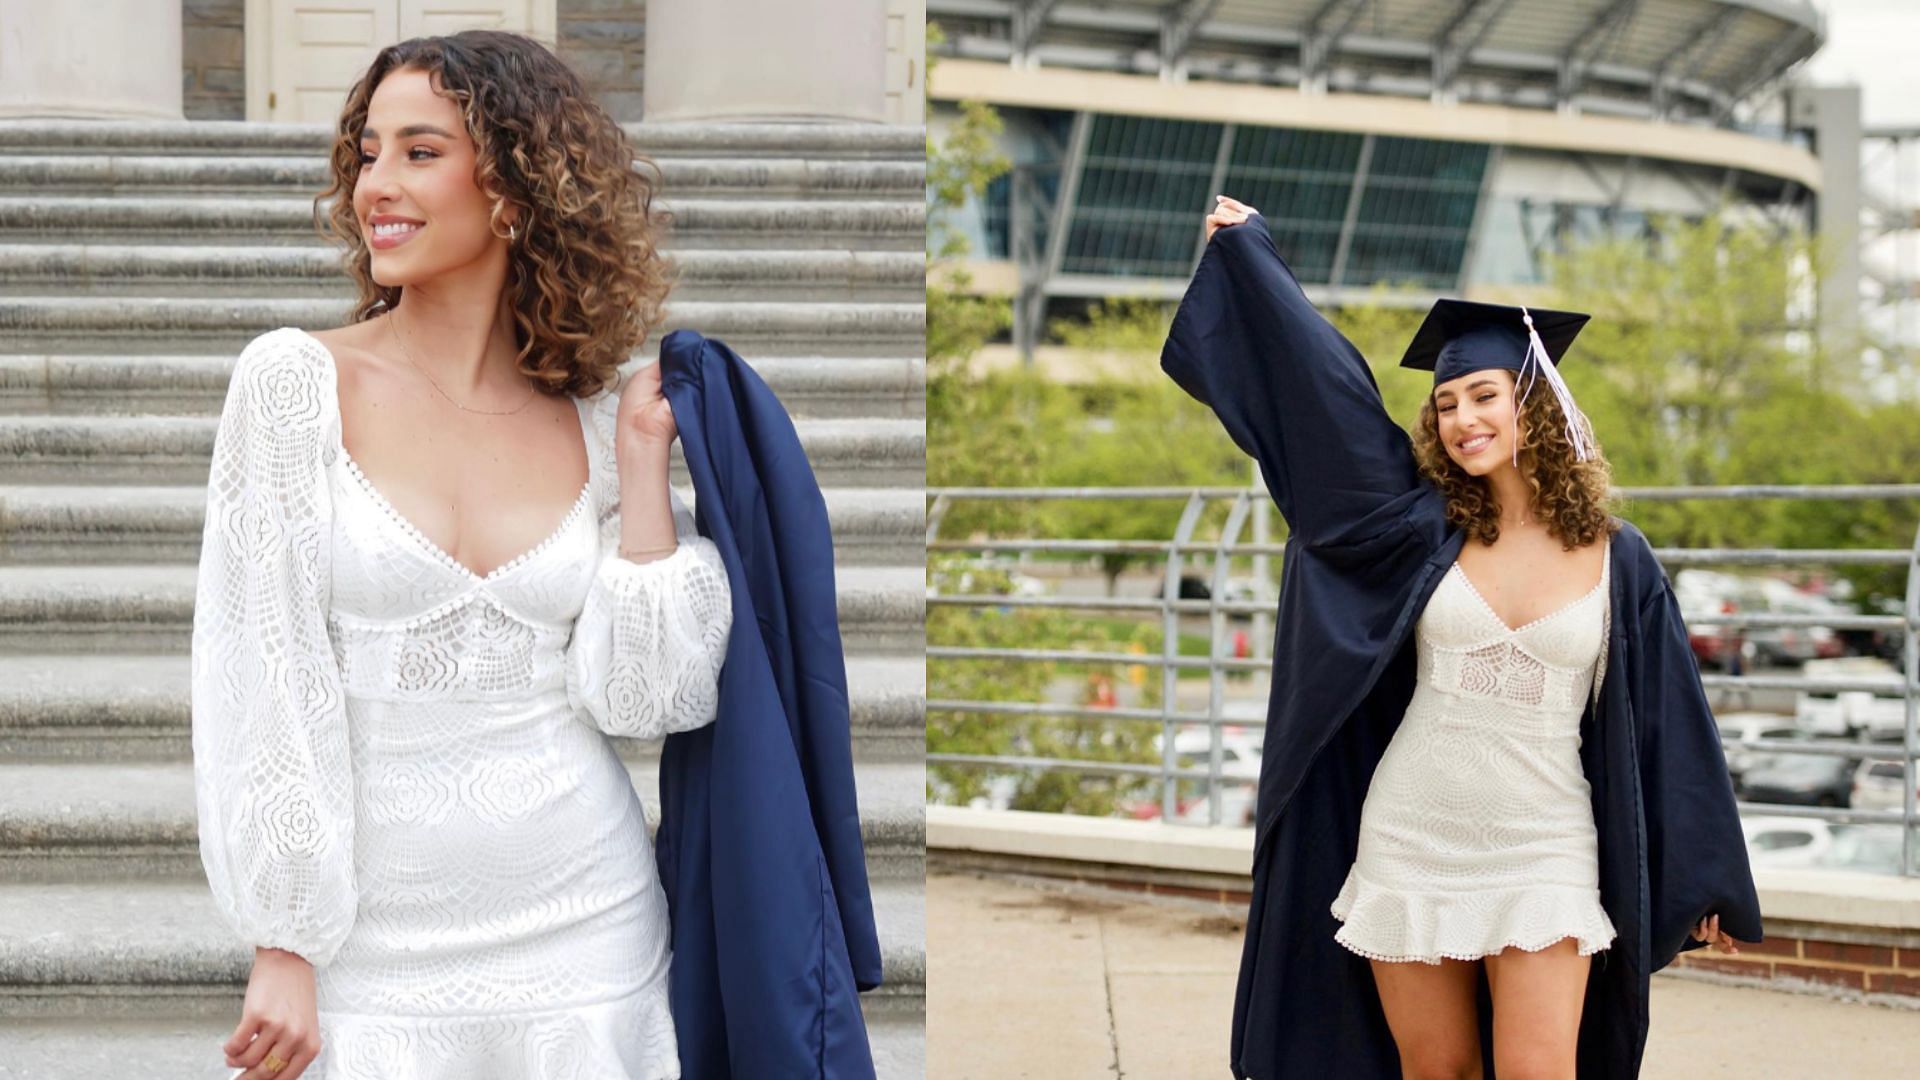 Duddy celebrating her degree from Penn State. Credit: @giaduddy (IG)